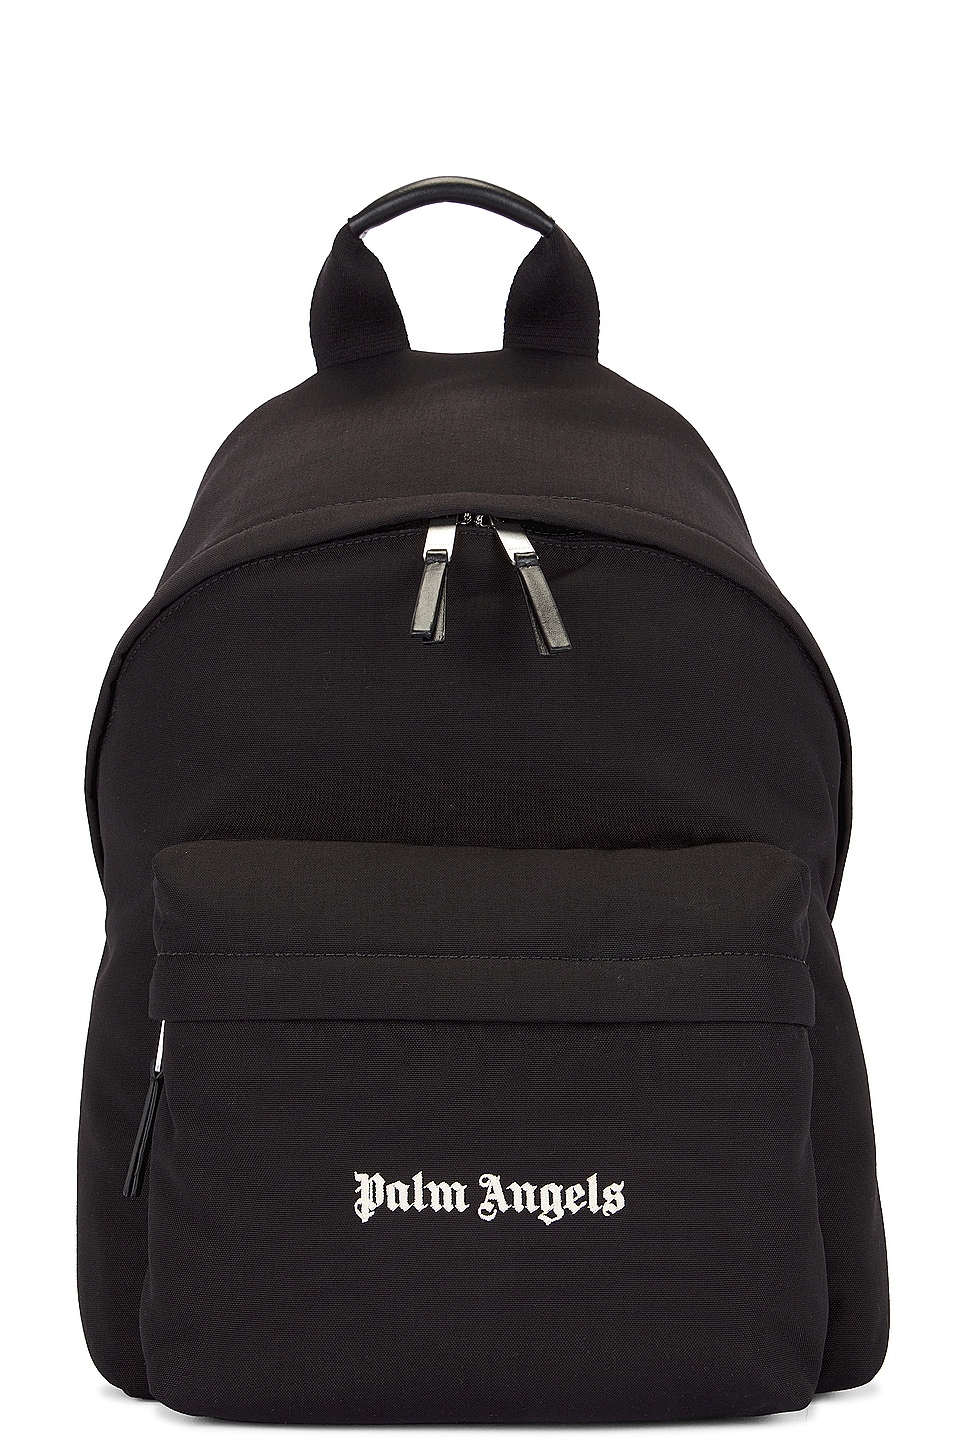 Palm Angels Cordura Logo Backpack in Black